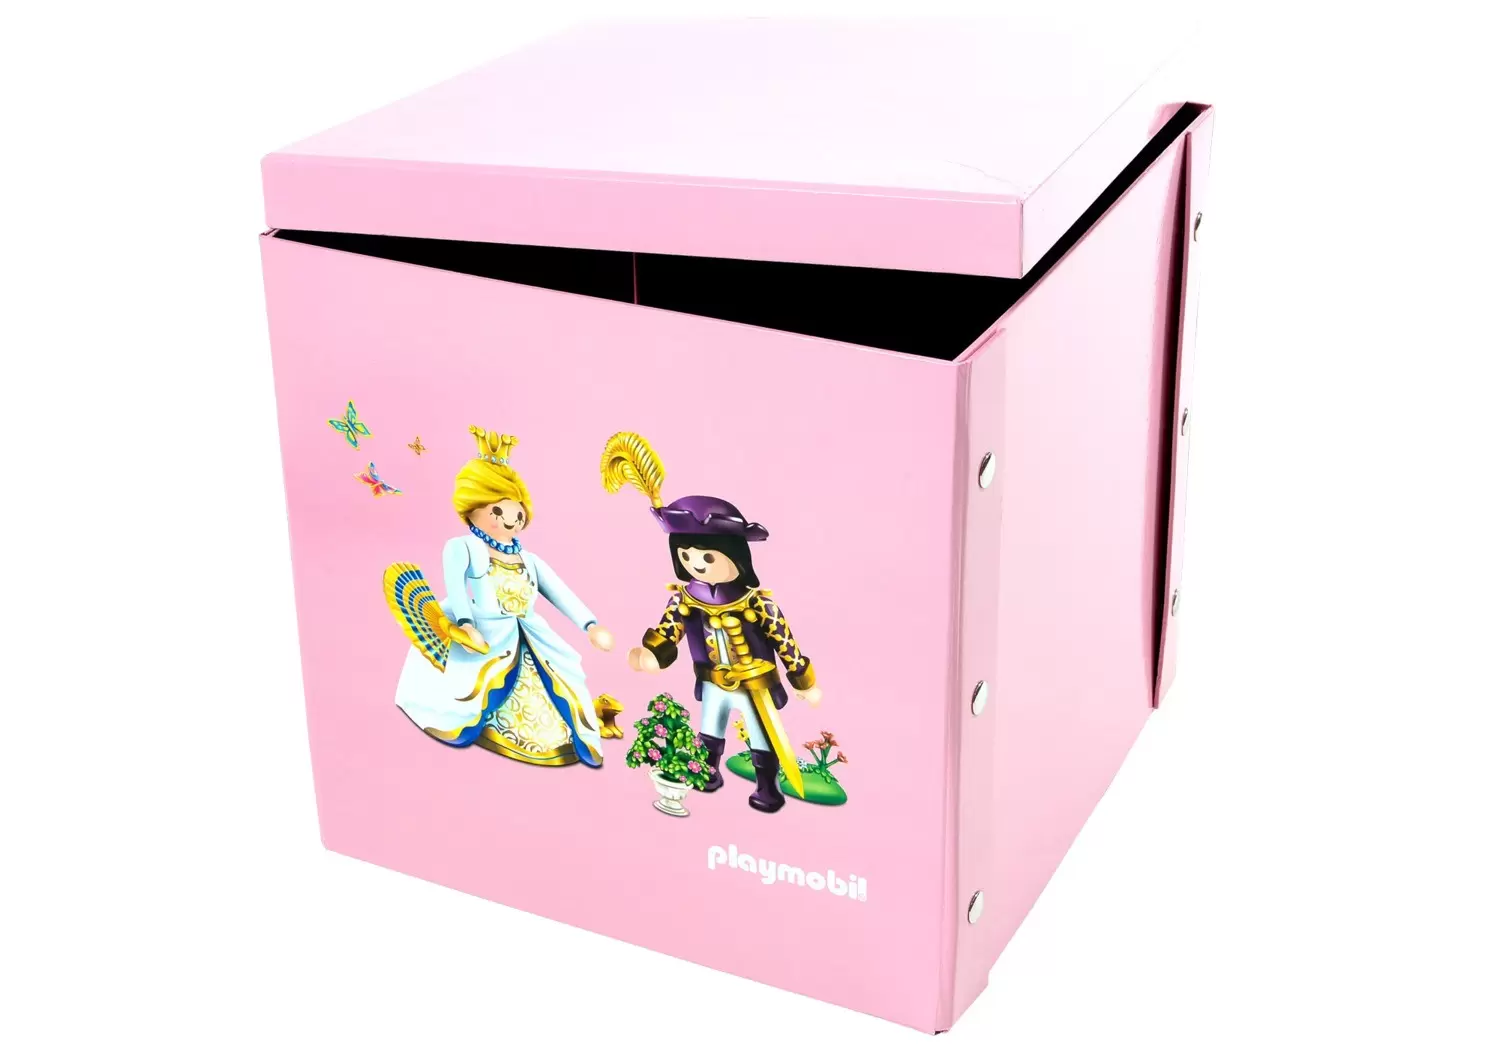 Playmobil Accessories & decorations - Princess Box